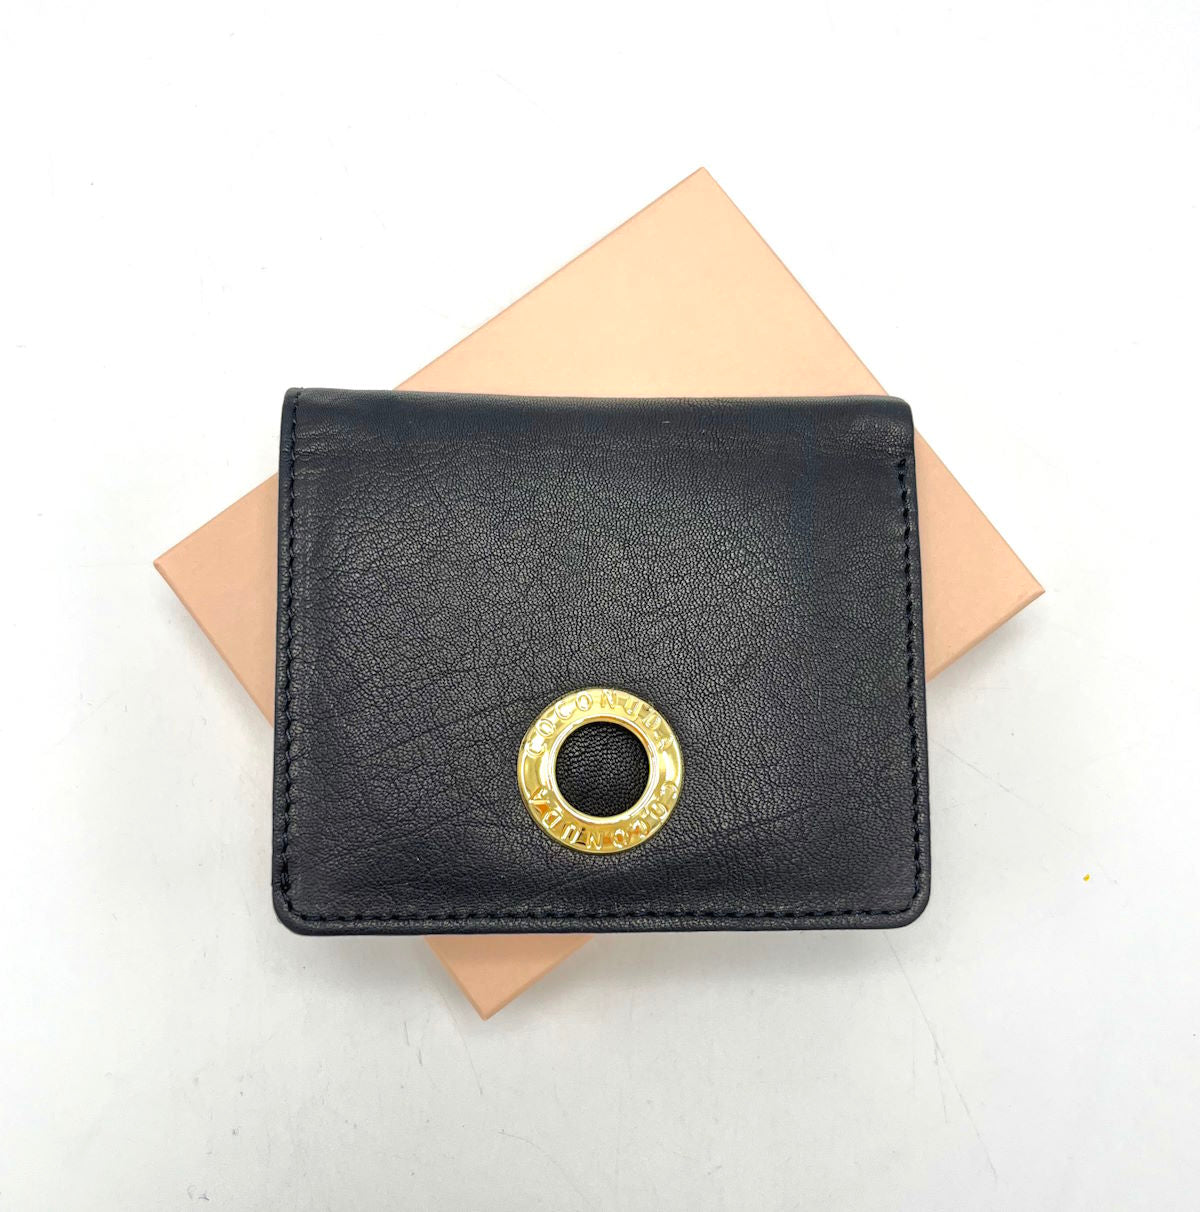 Genuine leather wallet, Coconuda, art. PDK403-93